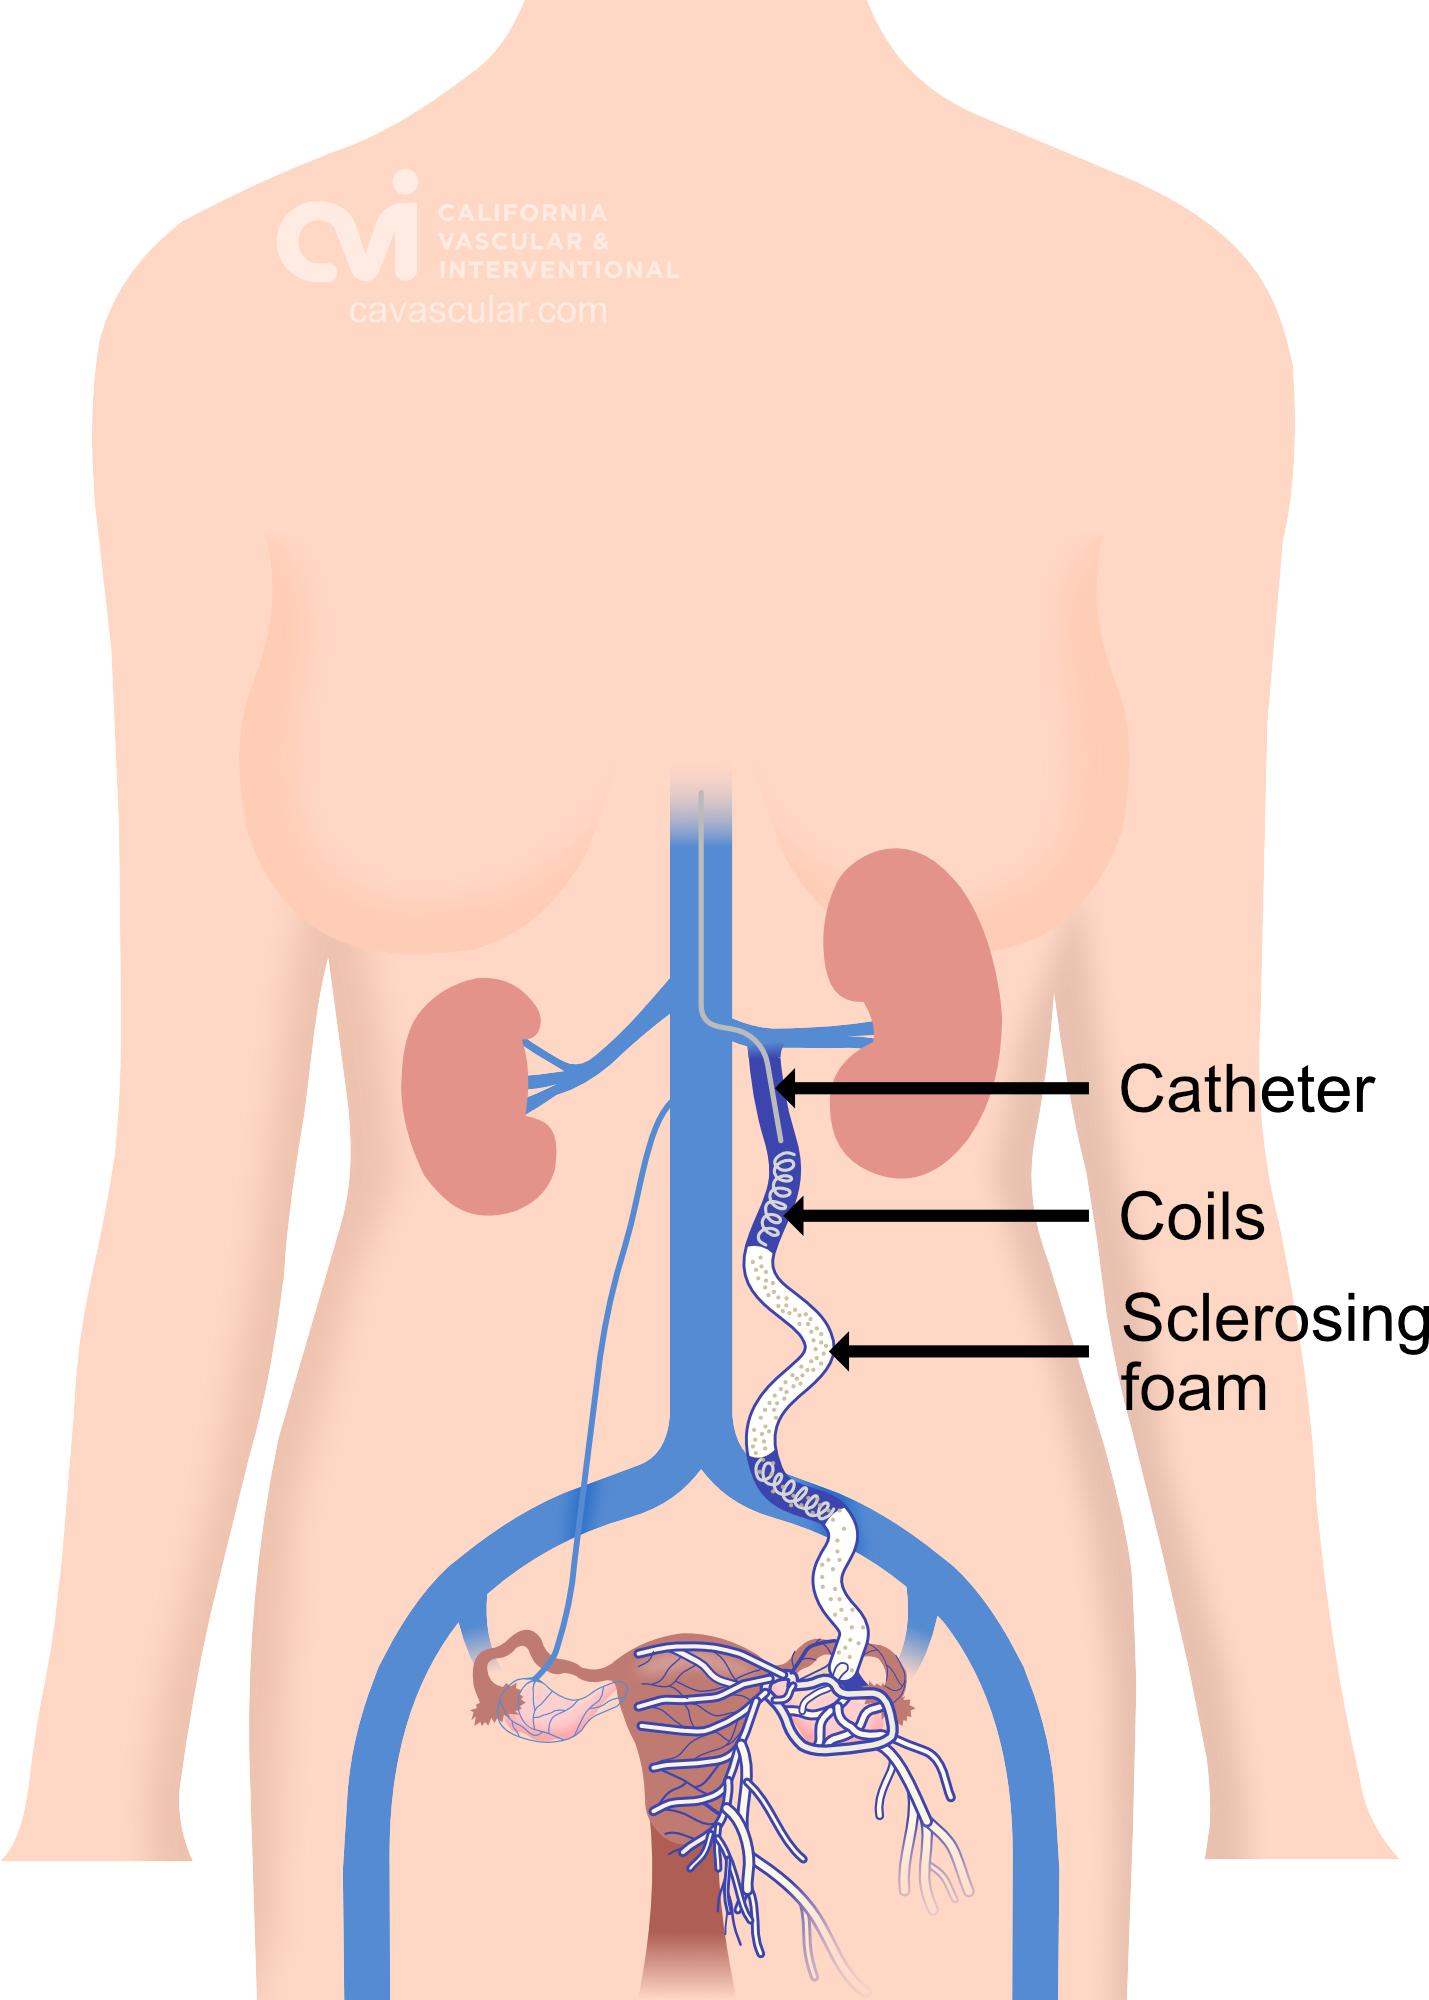 pelvic congestion syndrome post embolization treatment illustration 